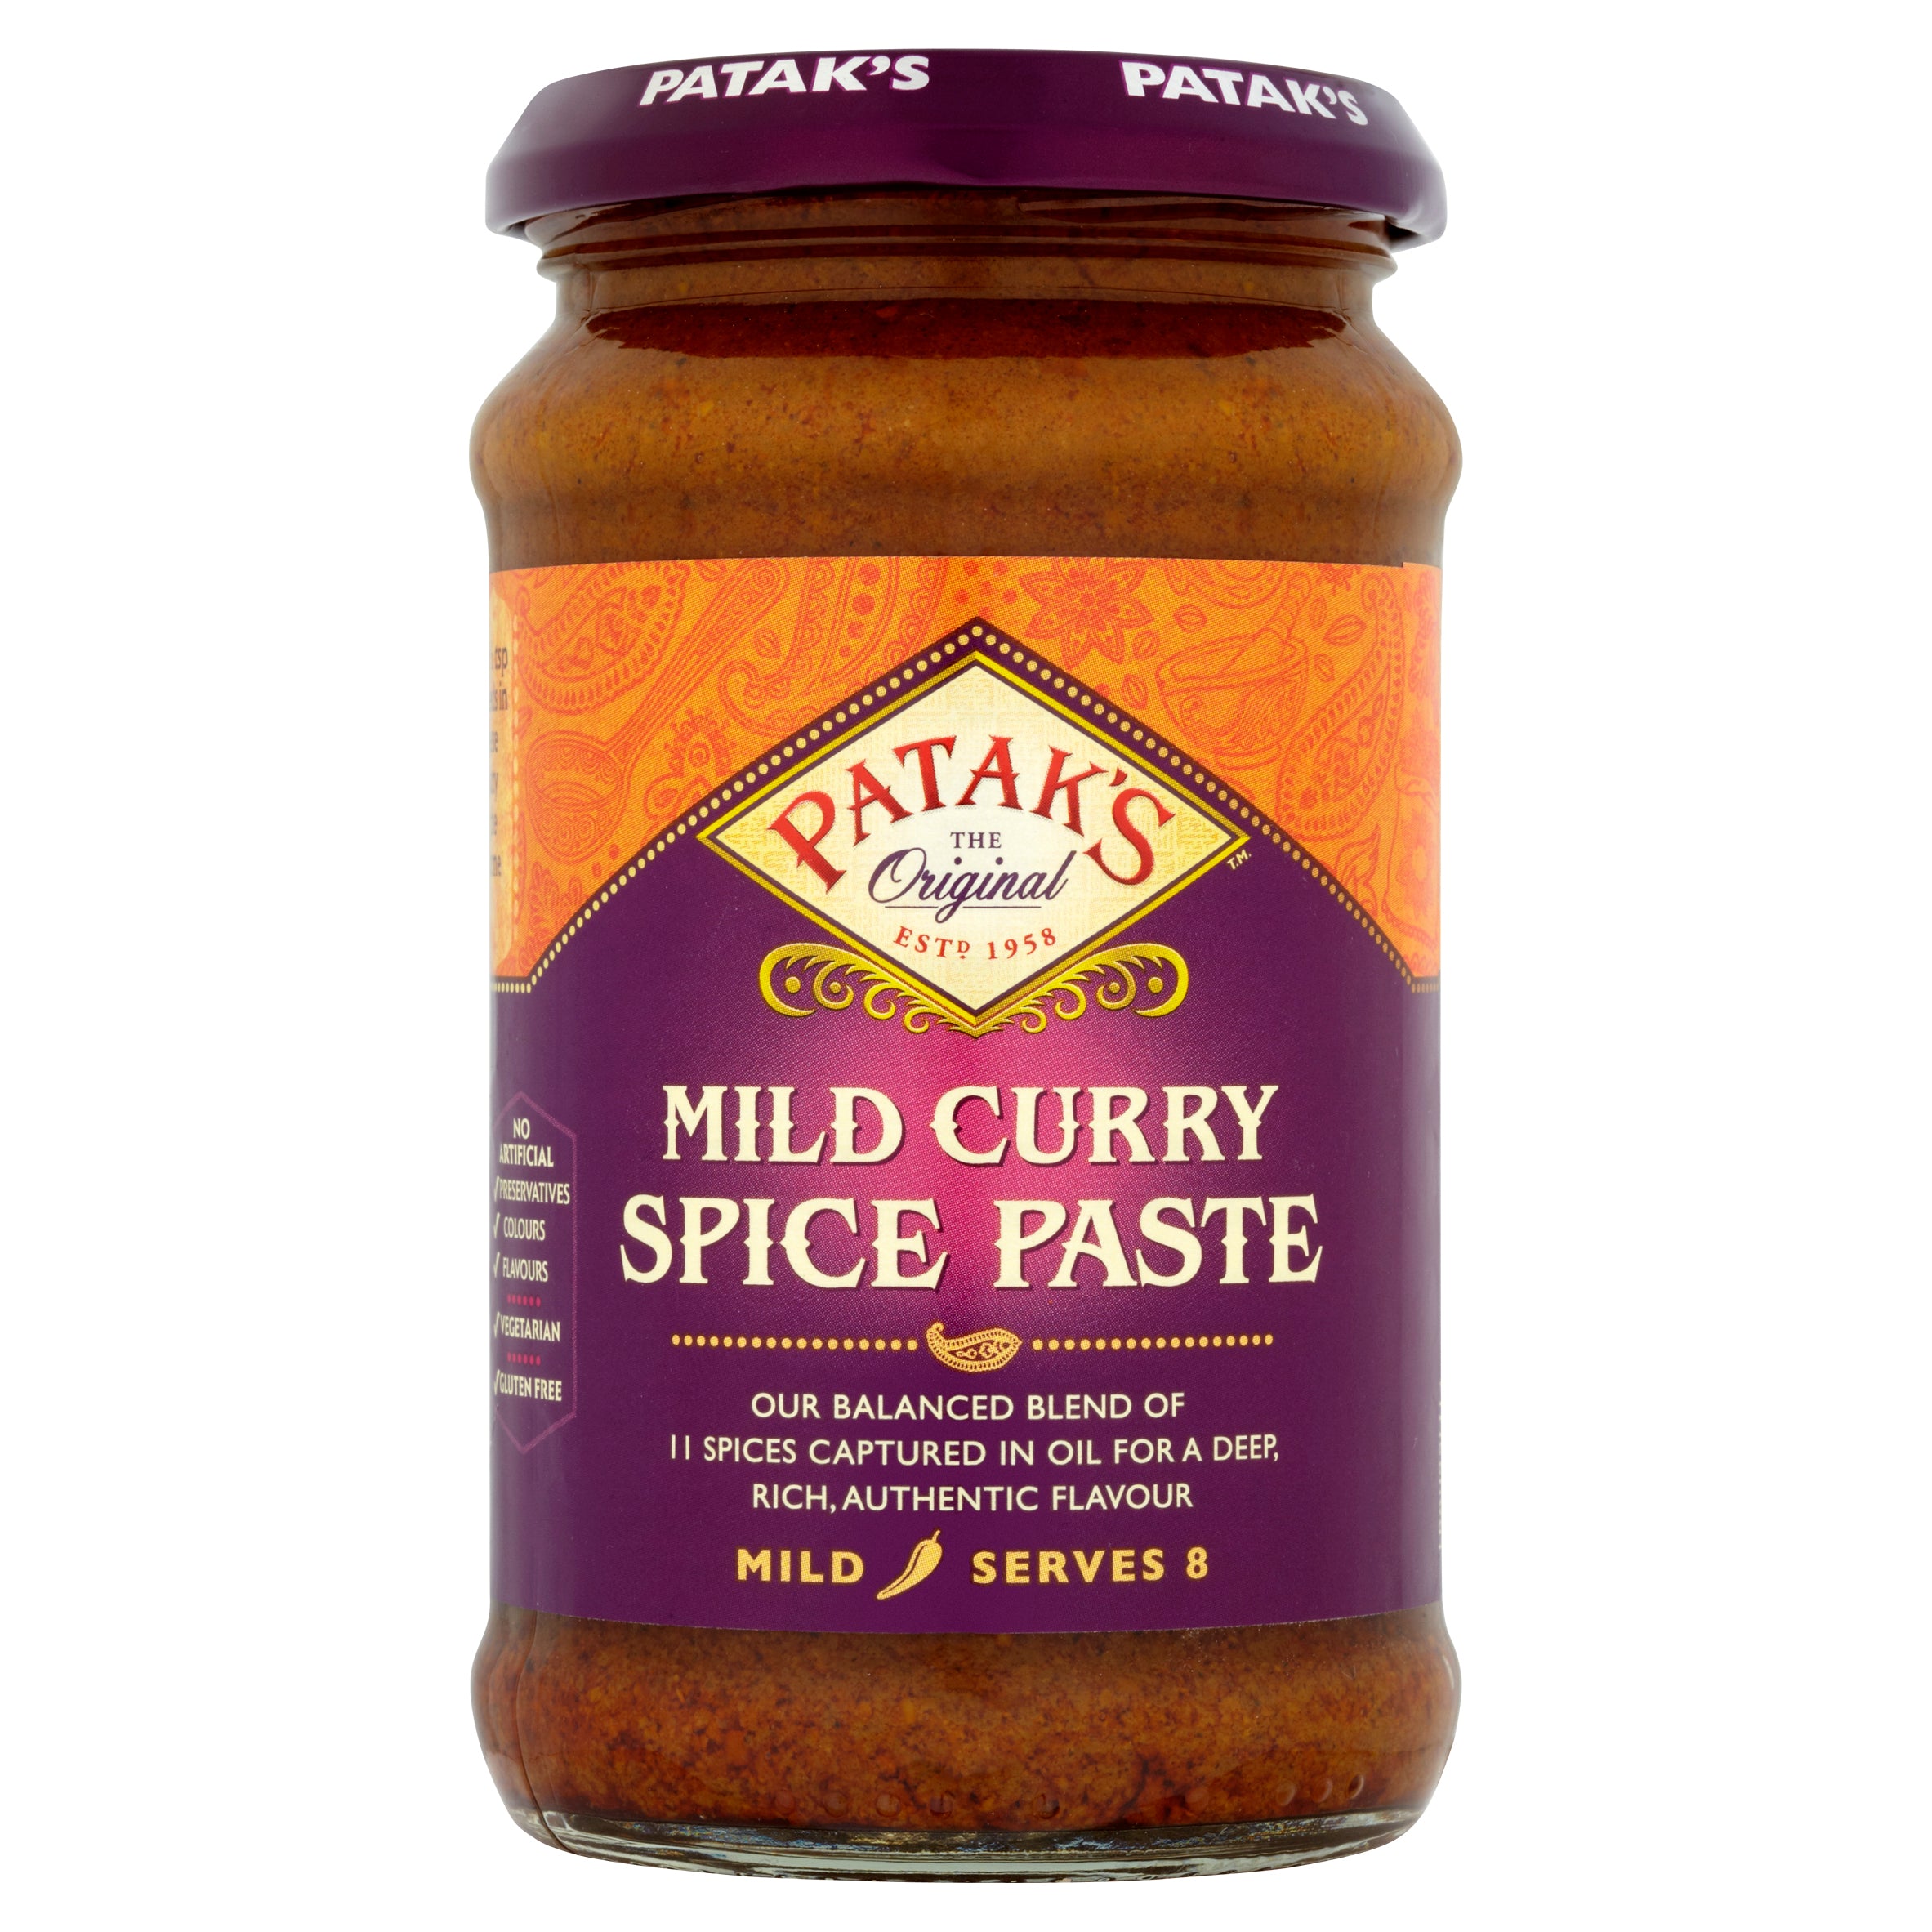 Mild Curry Spice Paste (Mild) 283g by Patak's